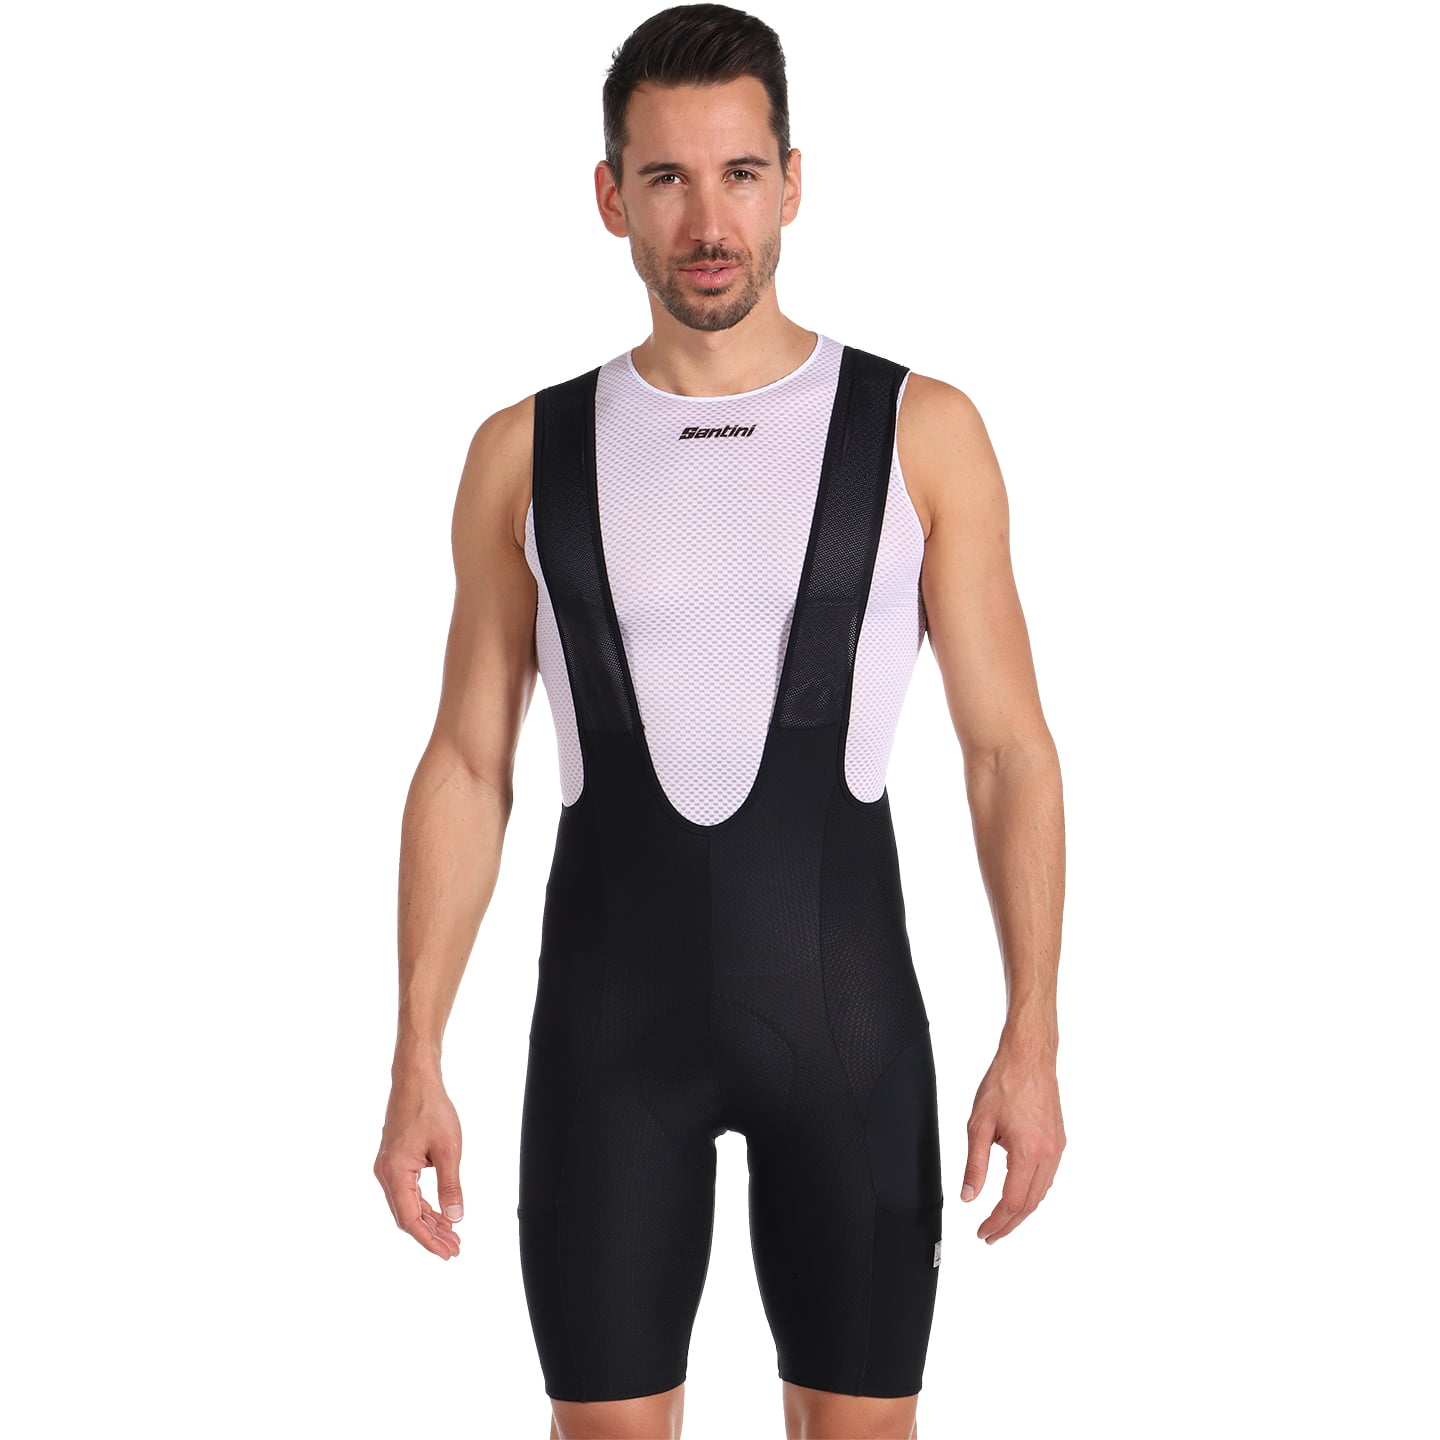 SANTINI Air Pro Gel 2 Gravel Bib Shorts Bib Shorts, for men, size 4XL, Cycle bibs, Bike clothing